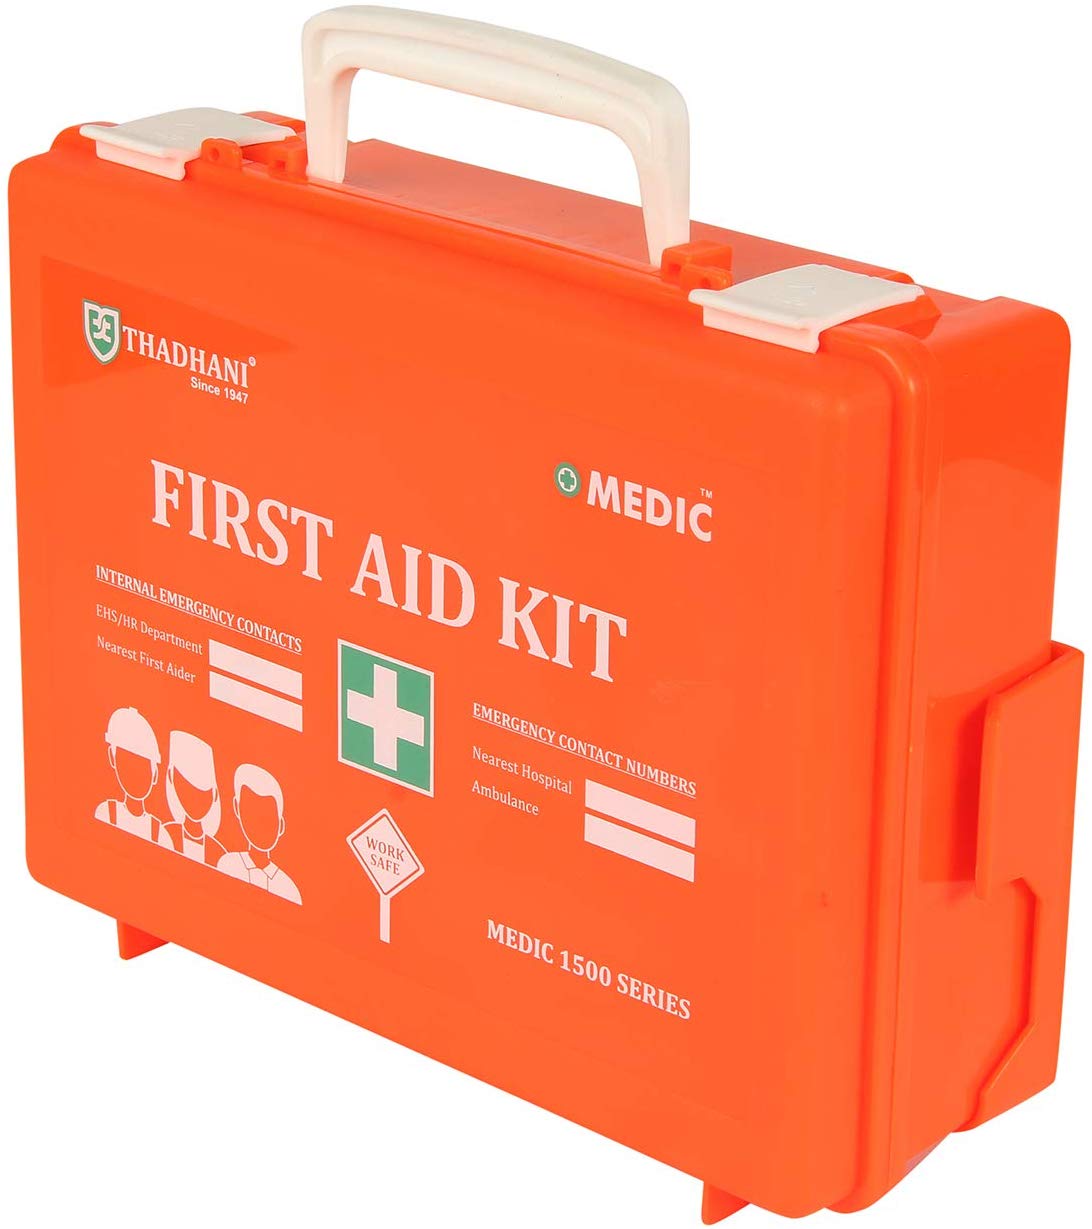 THADHANI First Aid Kit – MEDIC 1500 SERIES